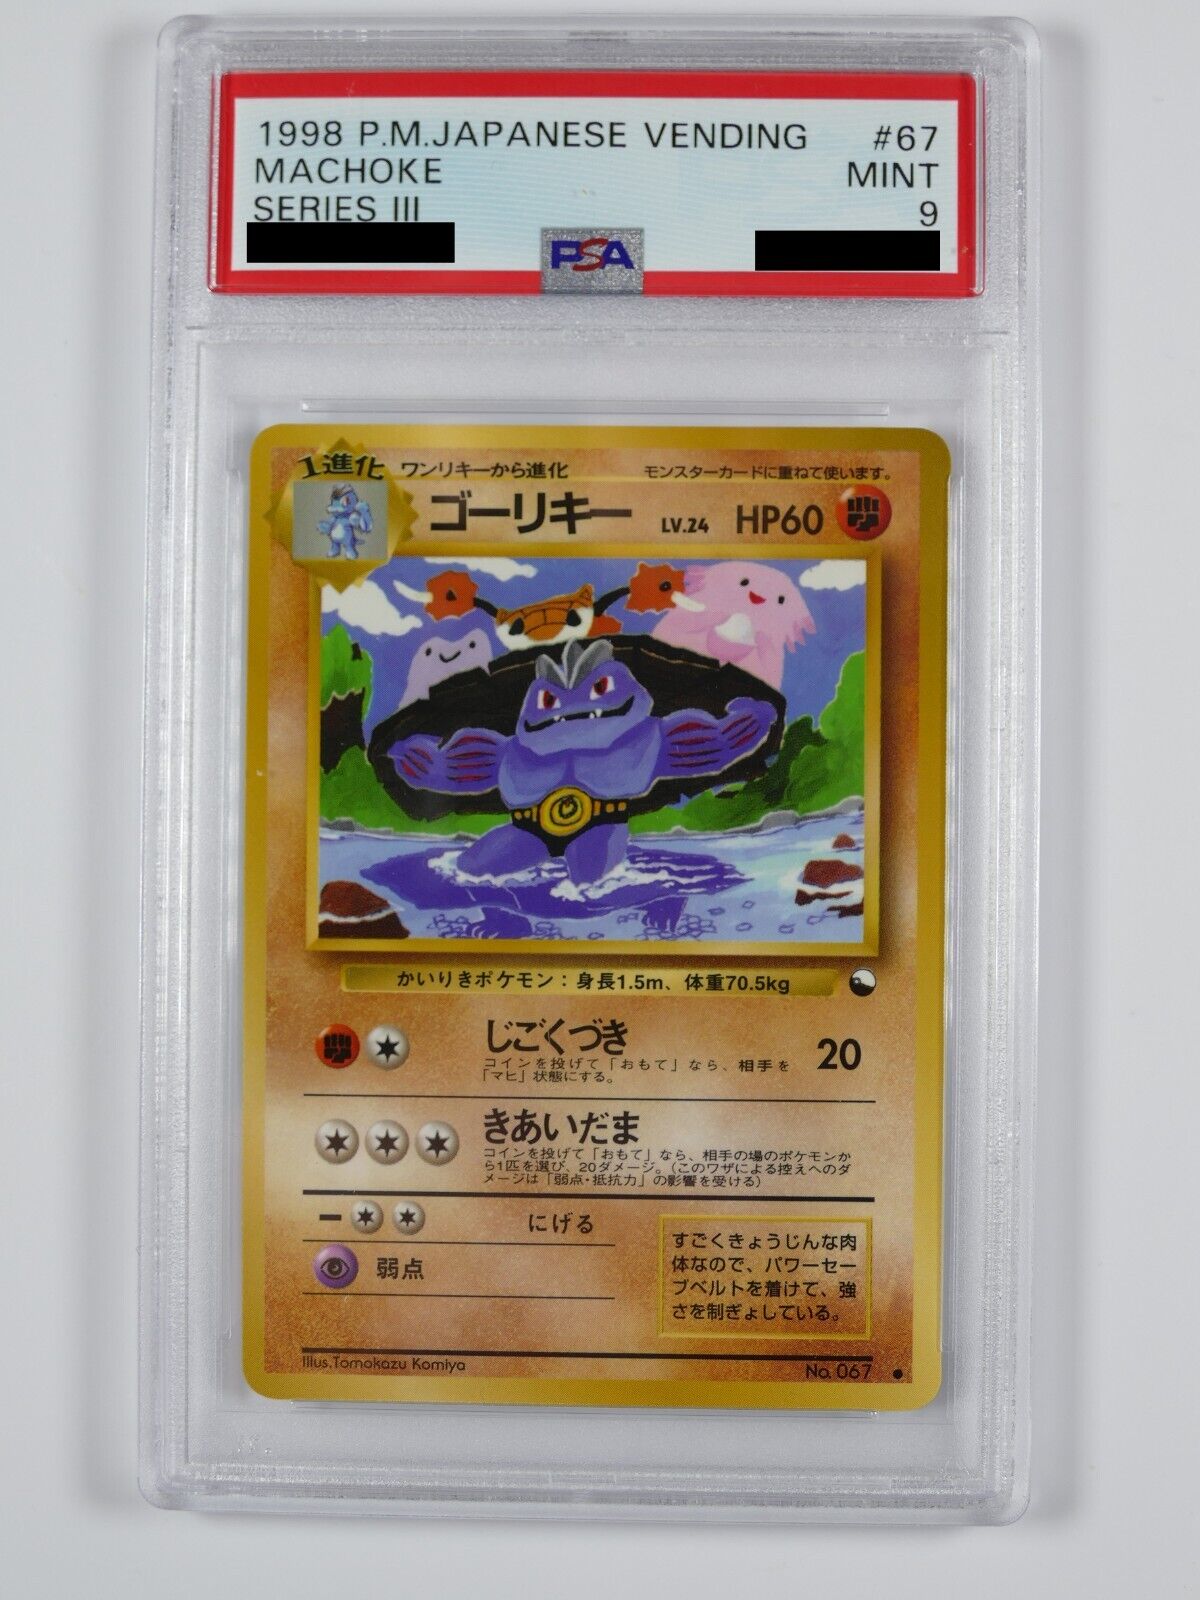 Pokémon No.067 Machoke Vending Machine Card Series III (Green) PSA 9 Mint